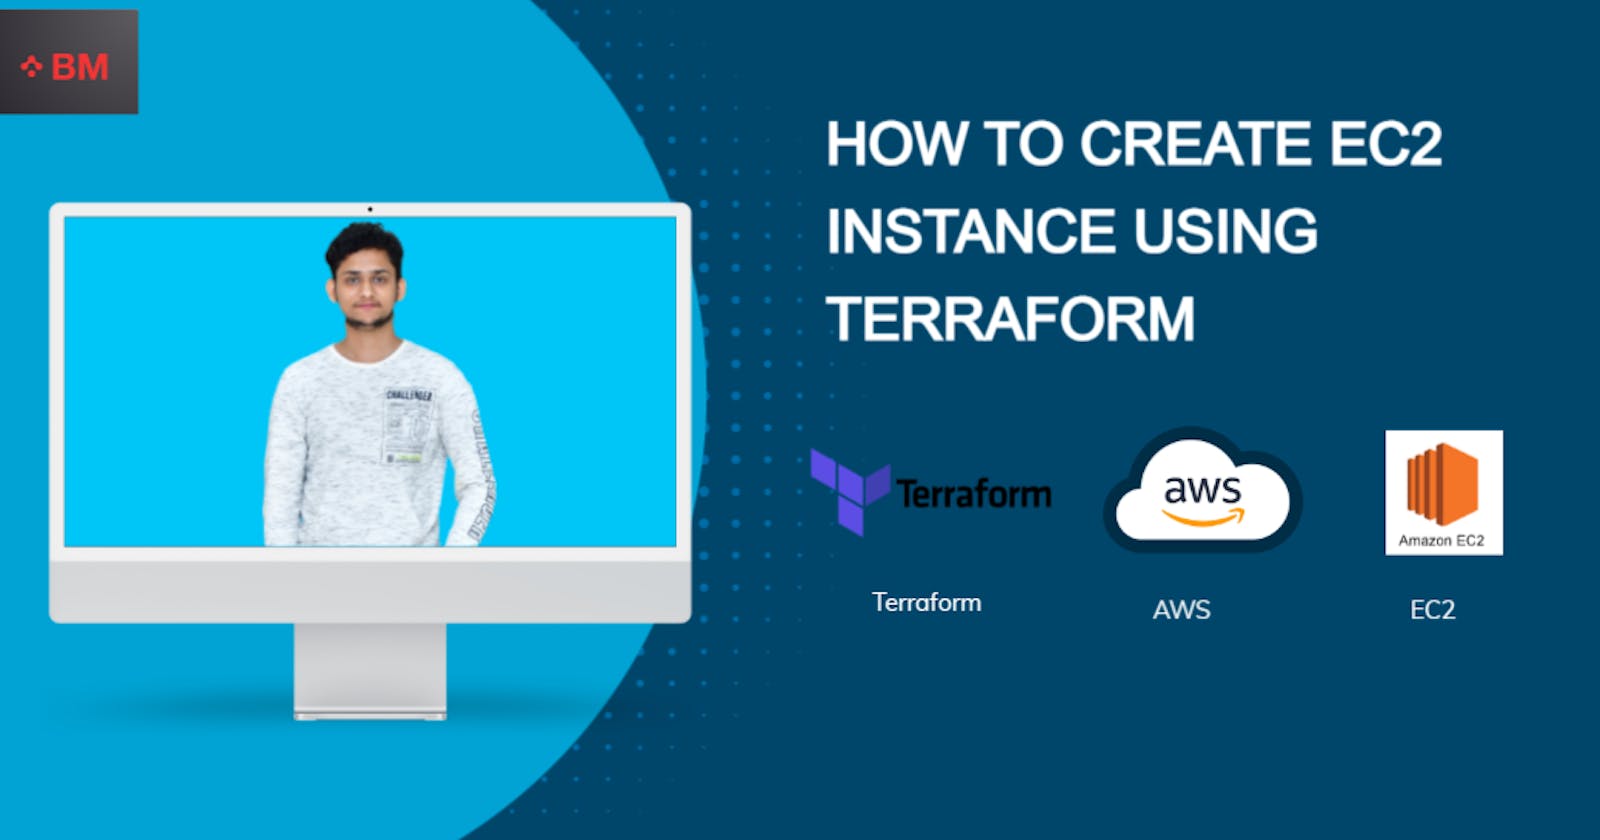 How to create EC2 instance using Terraform